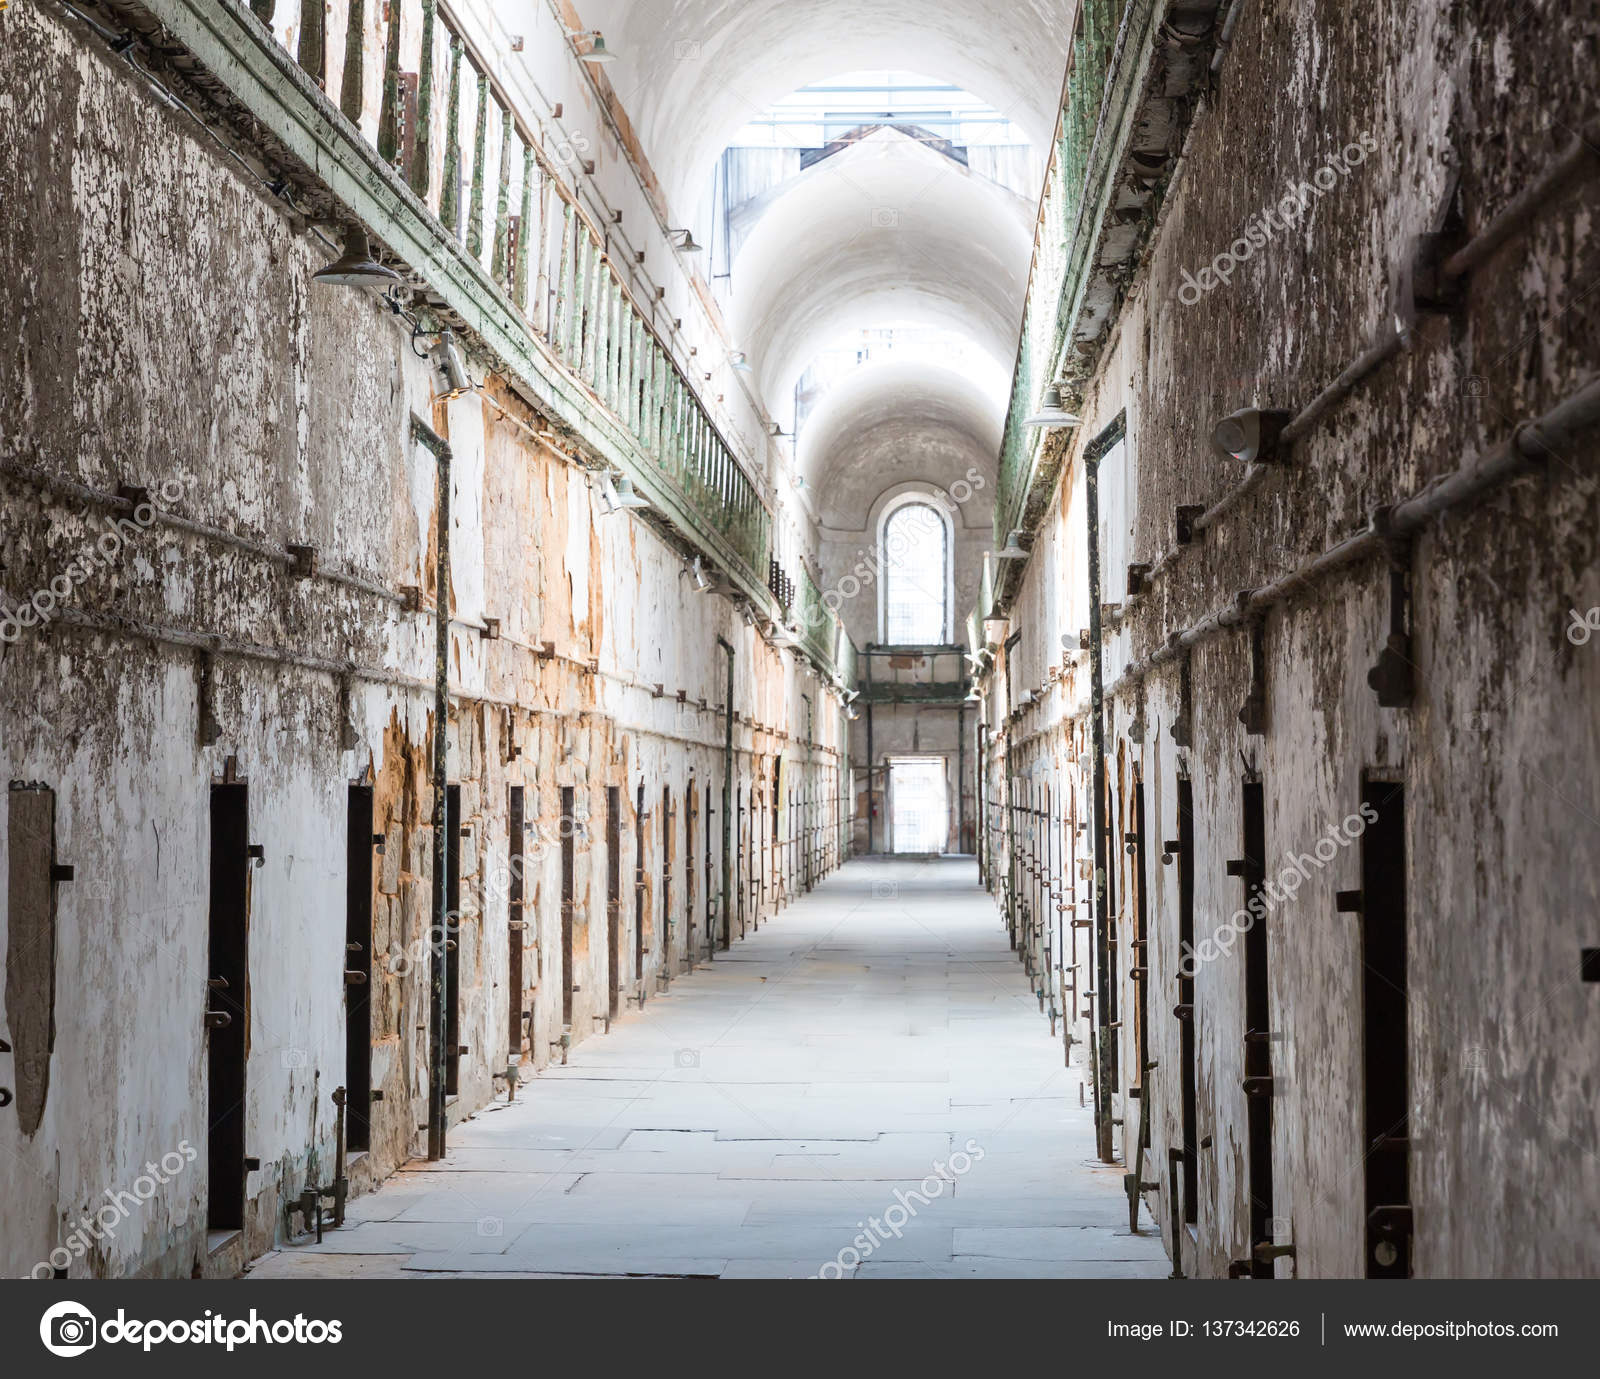 old prison interior — Stock Photo © Nomadsoul1 #137342626